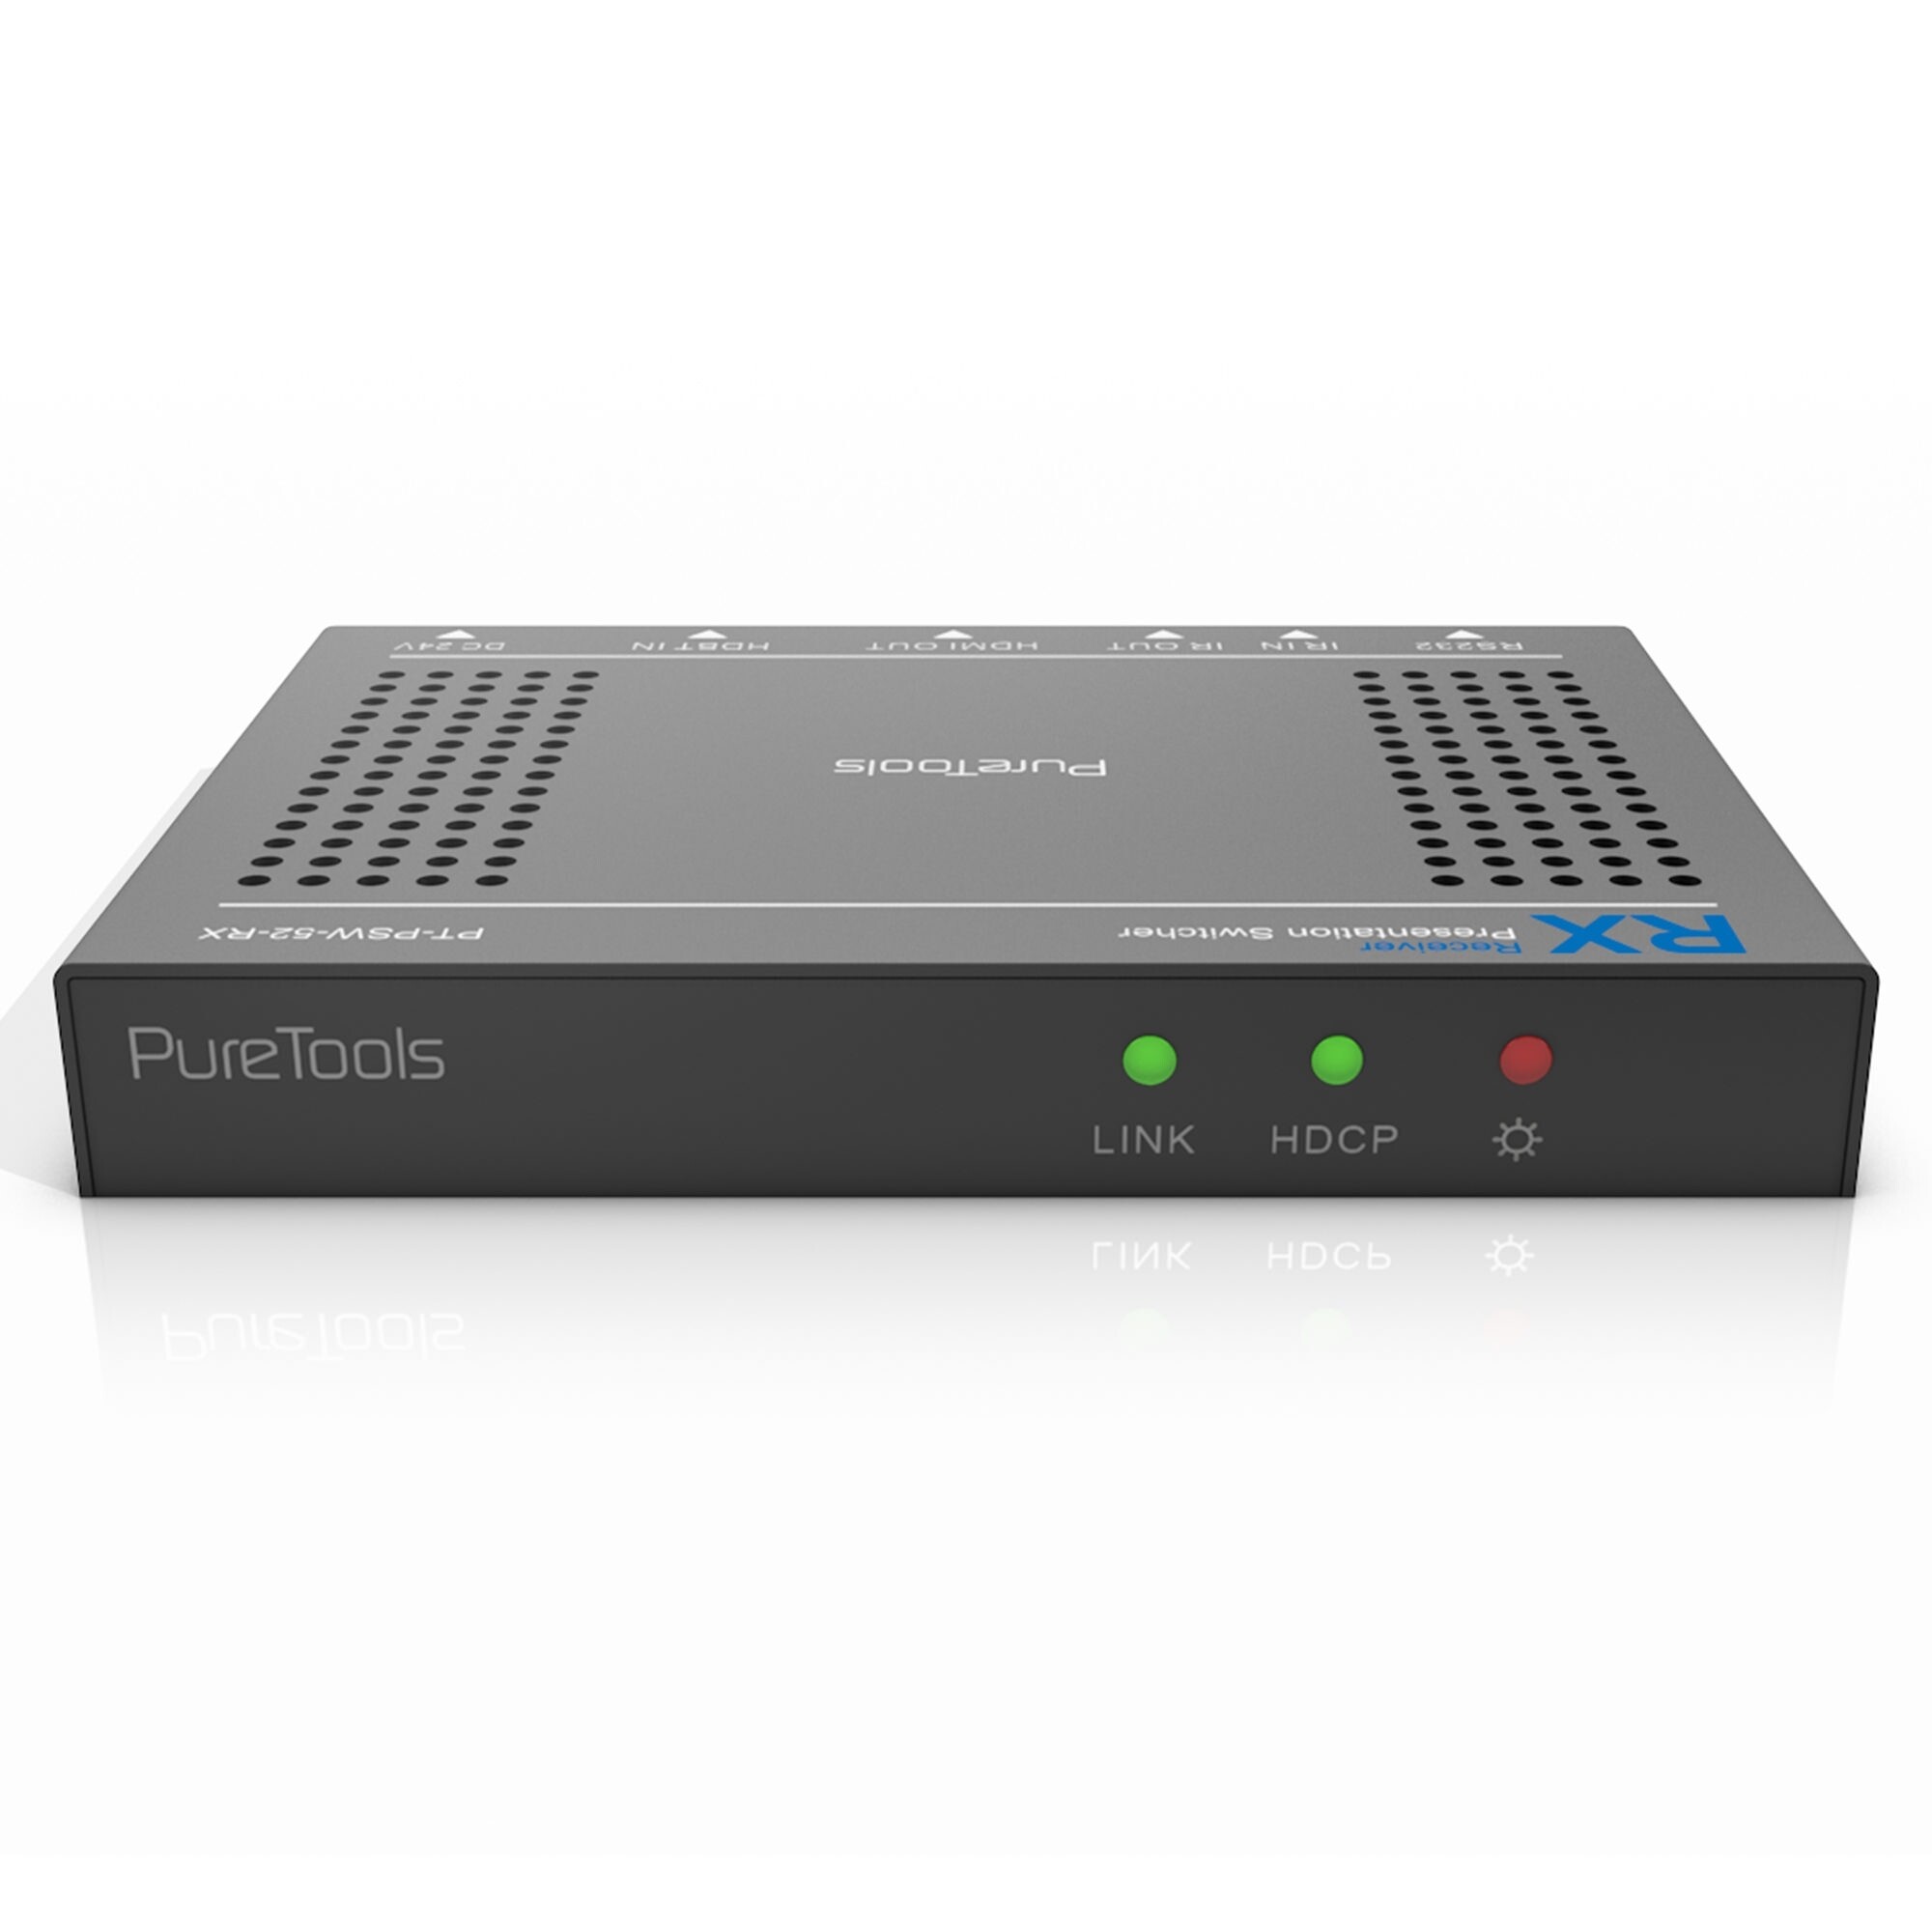 OneAV-PureTools-Seamless-Scaler-Switcher-5x2-1080P-3-level-MIC-HDMI-HDBT-Outputs